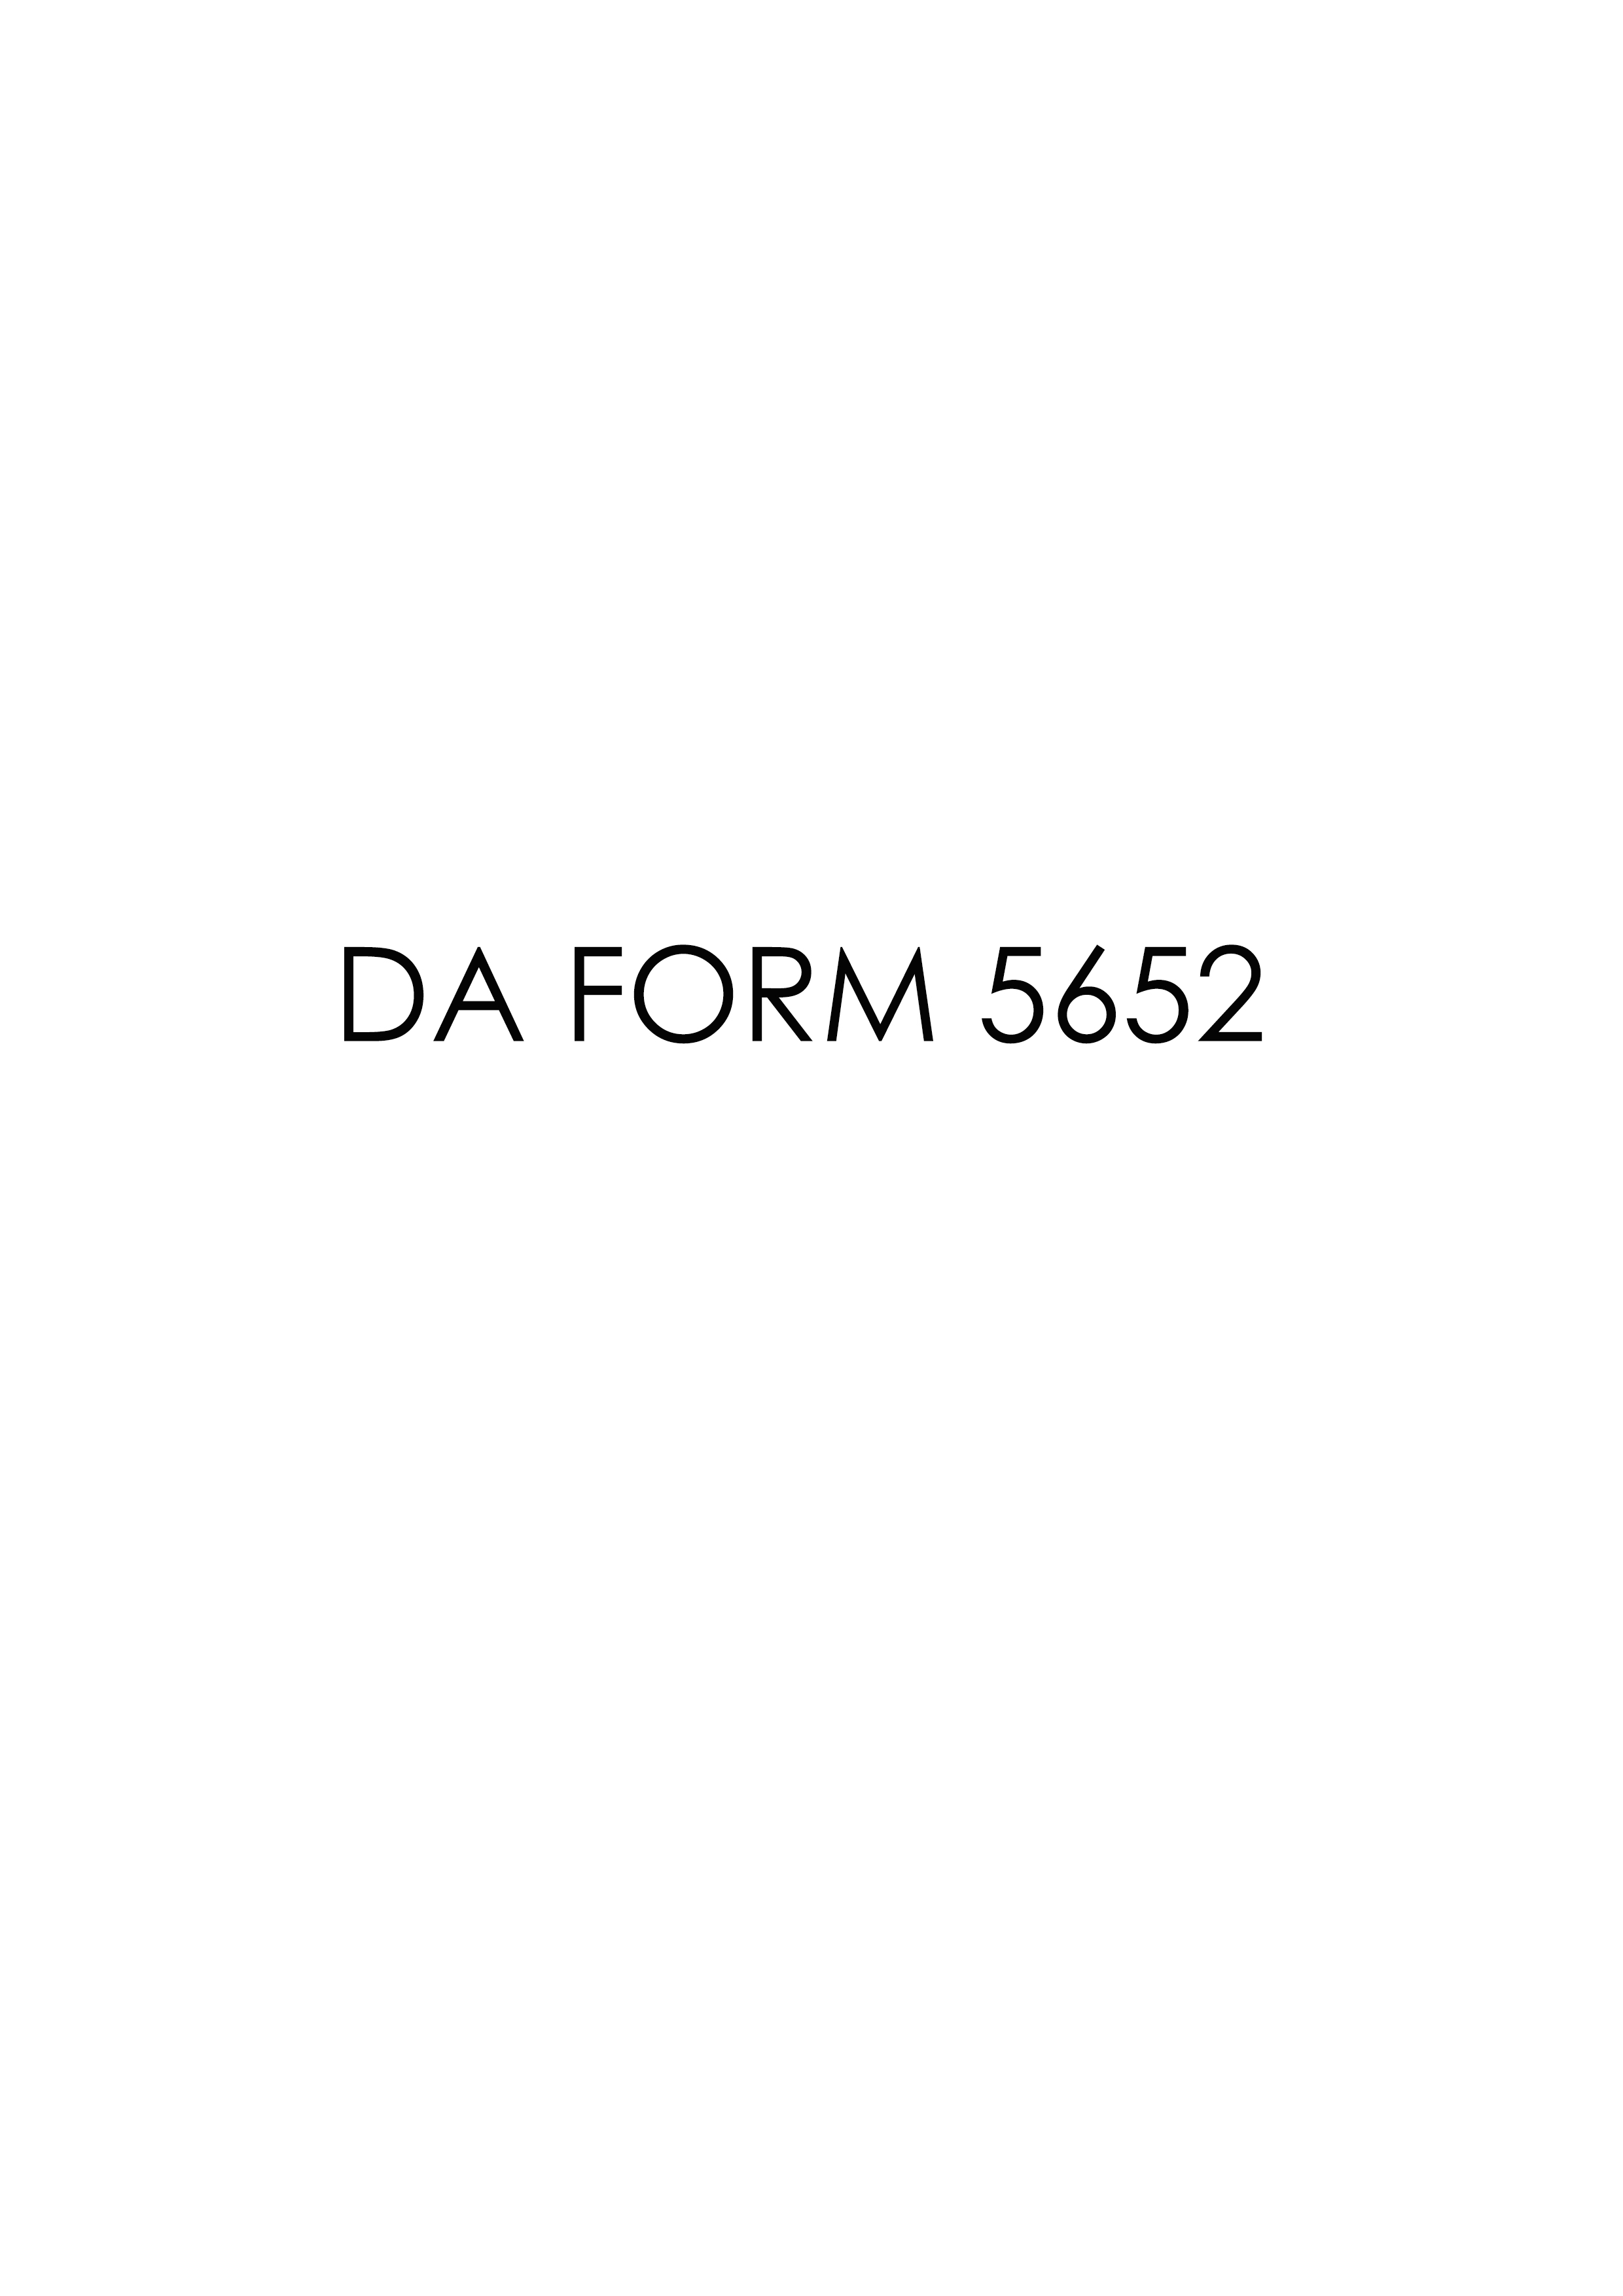 da Form 5652 fillable